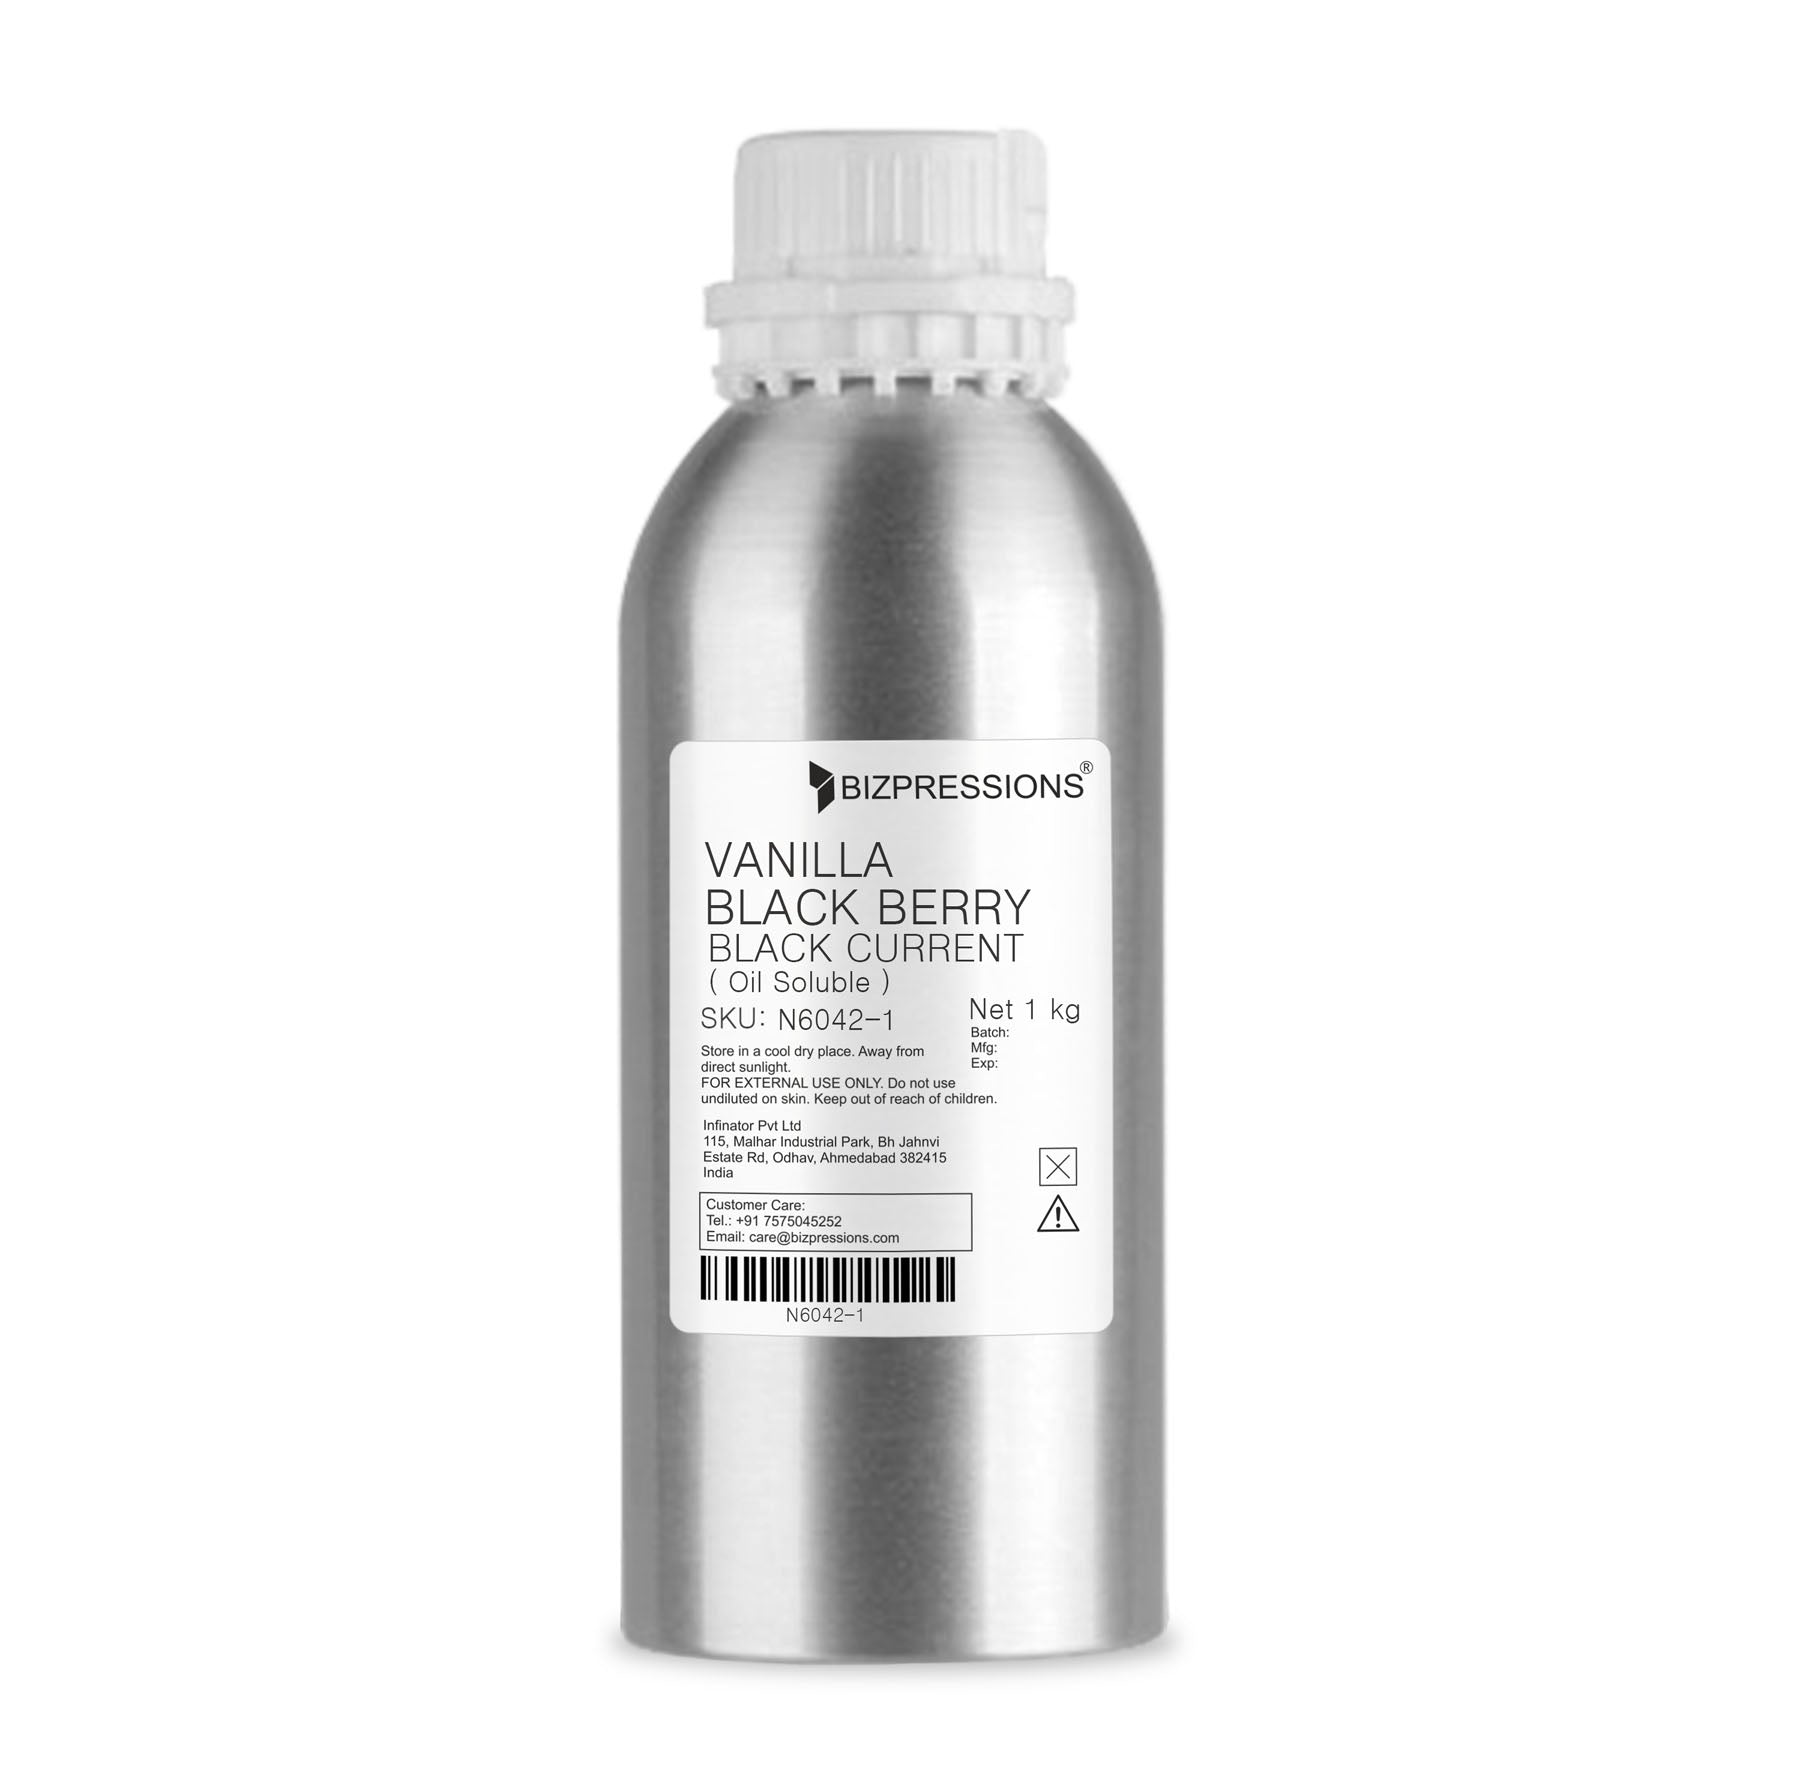 VANILLA BLACK BERRY BLACK CURRENT - Fragrance ( Oil Soluble ) - 1 kg